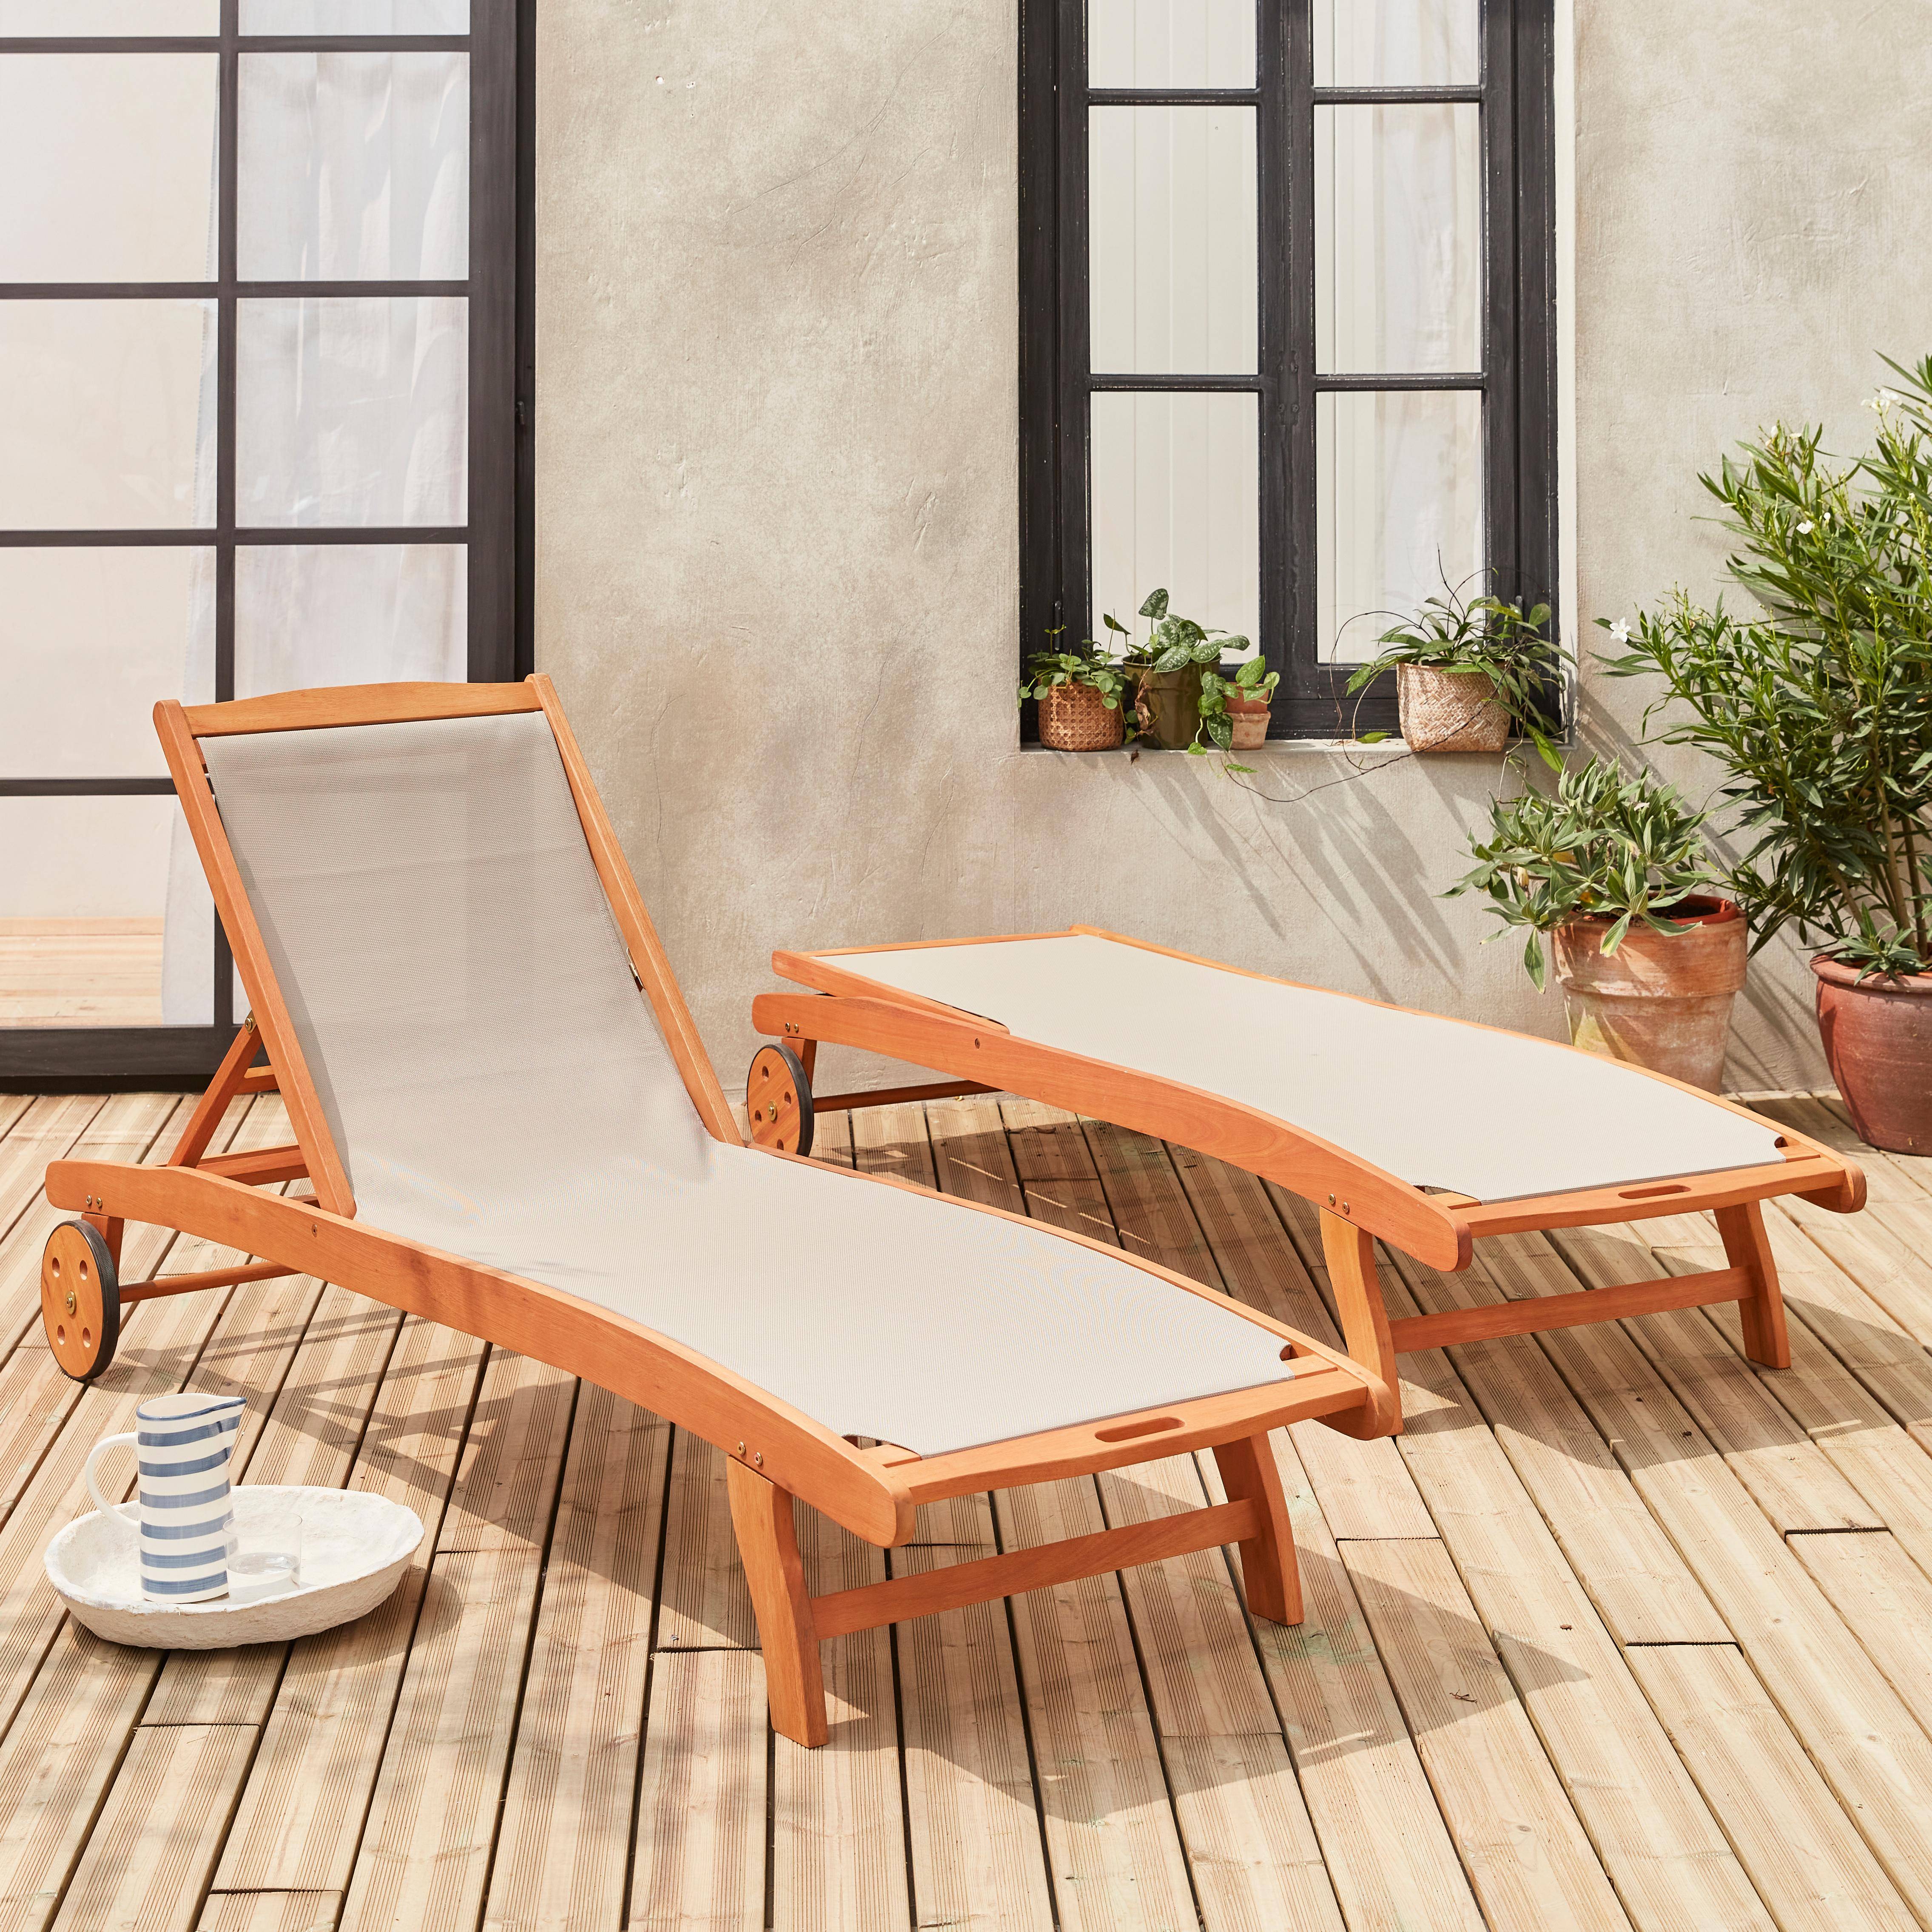 2er Set Holz Sonnenliegen - Marbella Taupegrau - 2 Liegestühle aus geöltem FSC-Eukalyptusholz und Textilene in Taupegrau Photo2